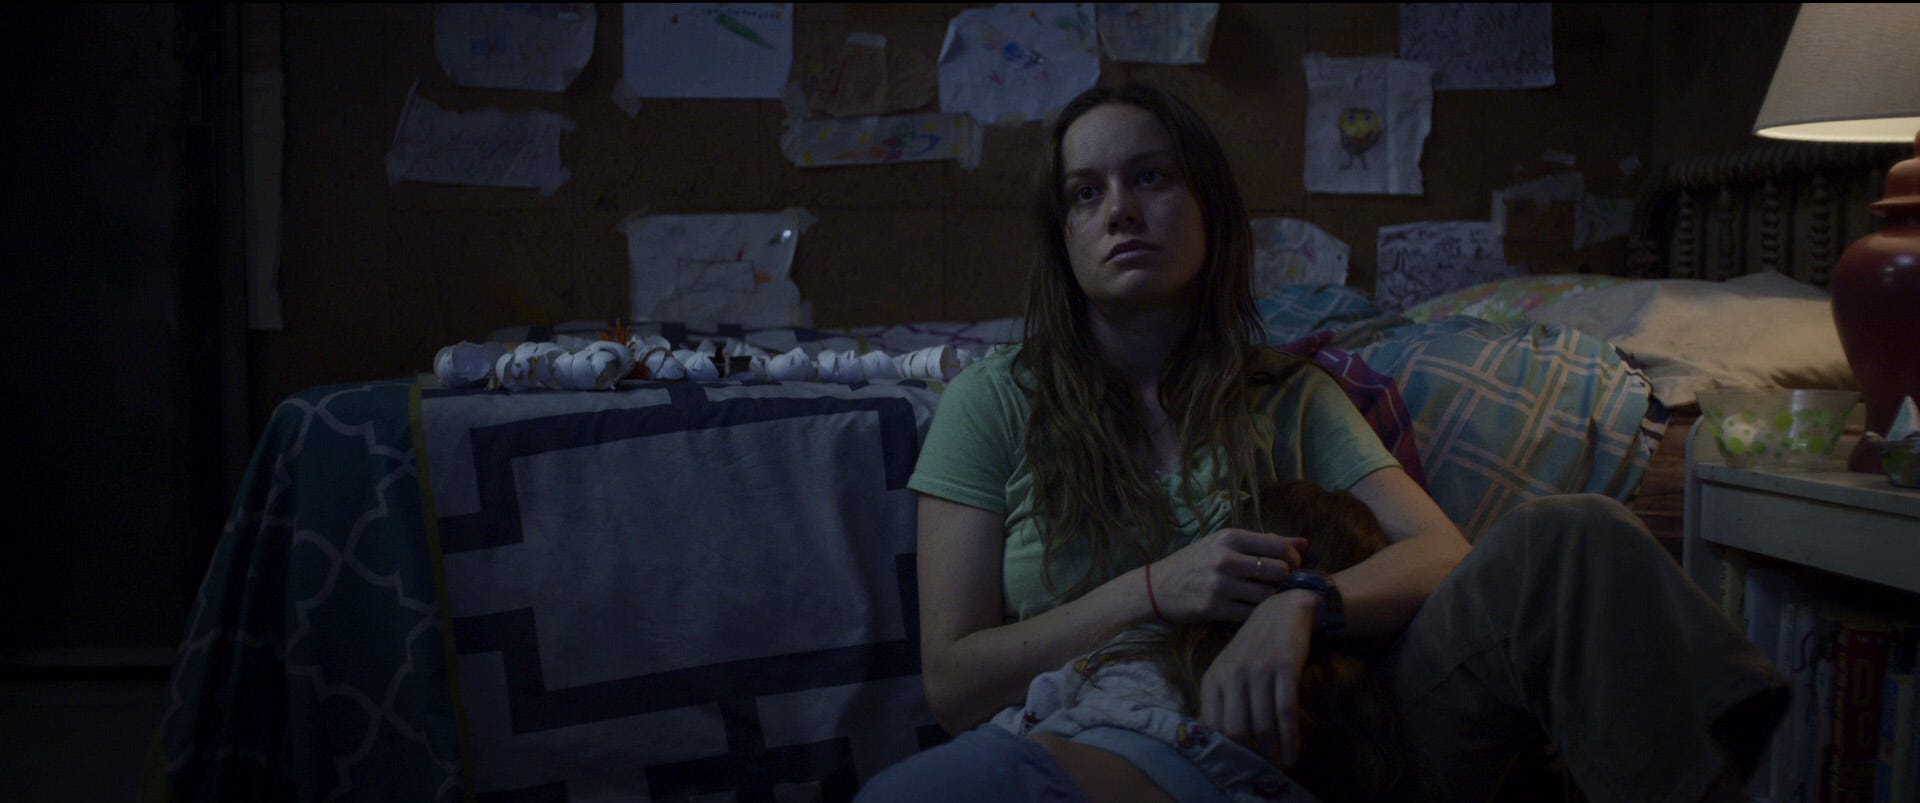 Room 15 Film Review Brie Larson S Big Breakthrough Is A By Dan Owen Dans Media Digest